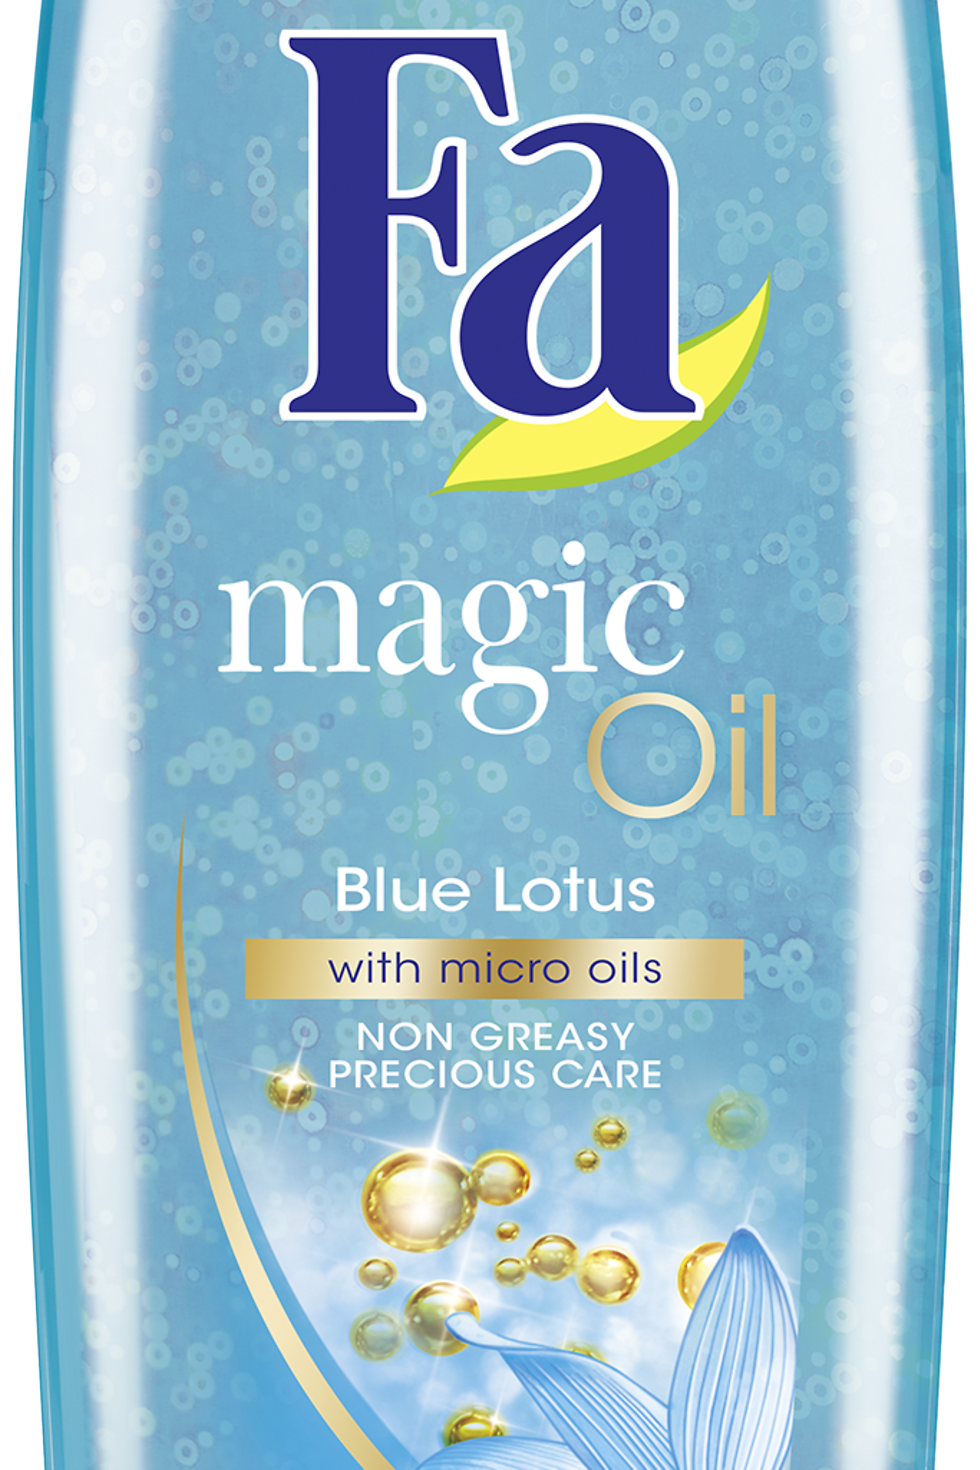 
Fa Magic Oil modrý lotos, sprchovací gél